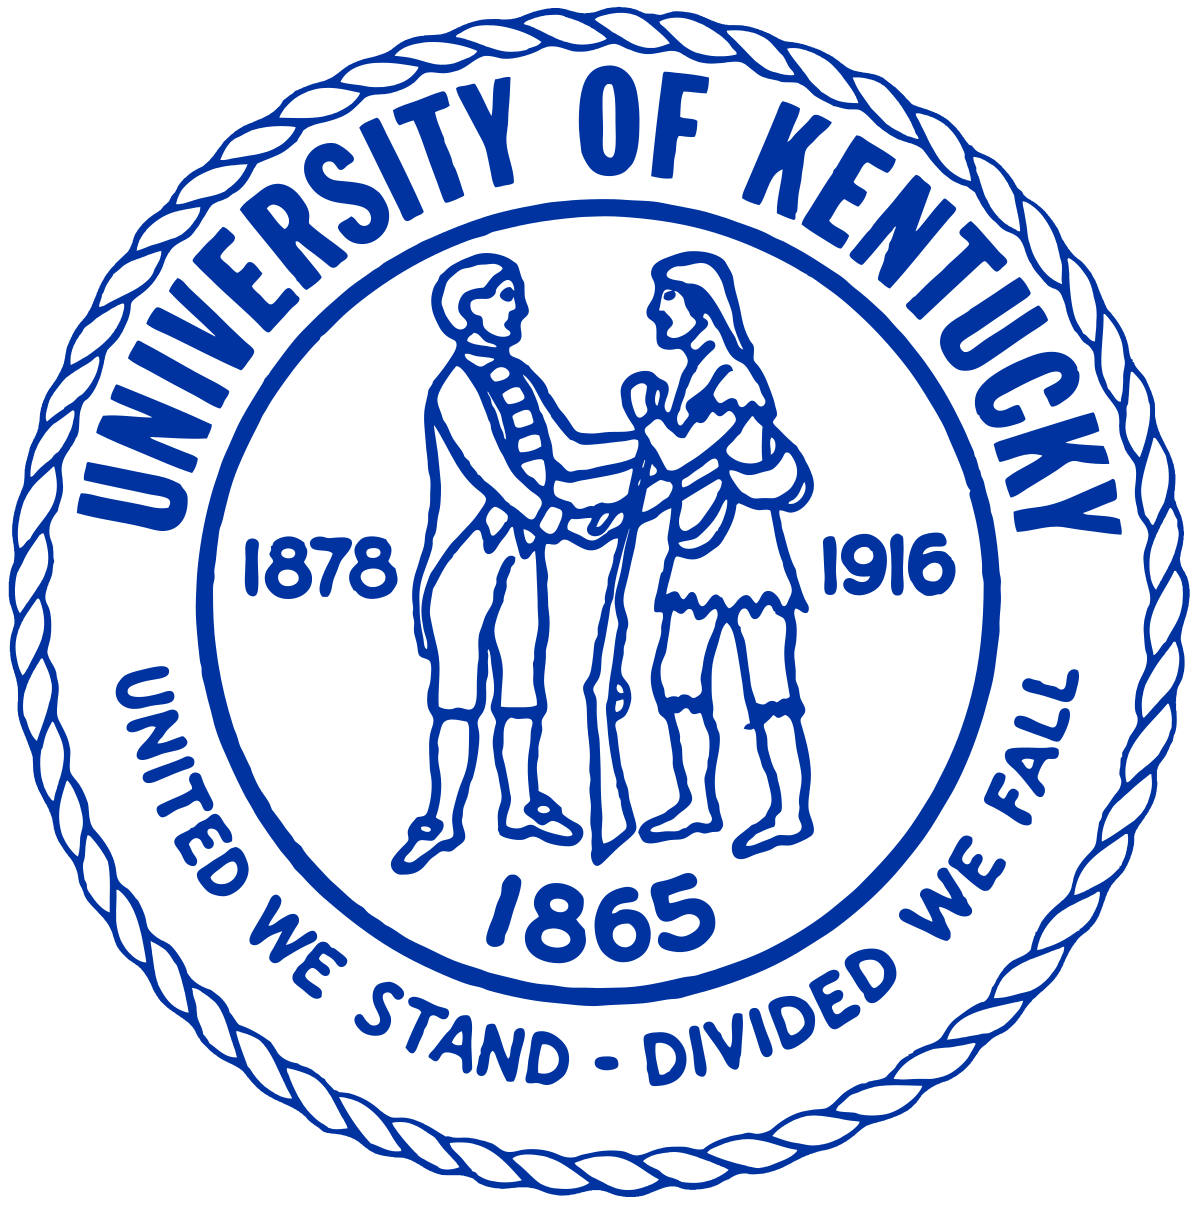 U of K Logo - University of Kentucky